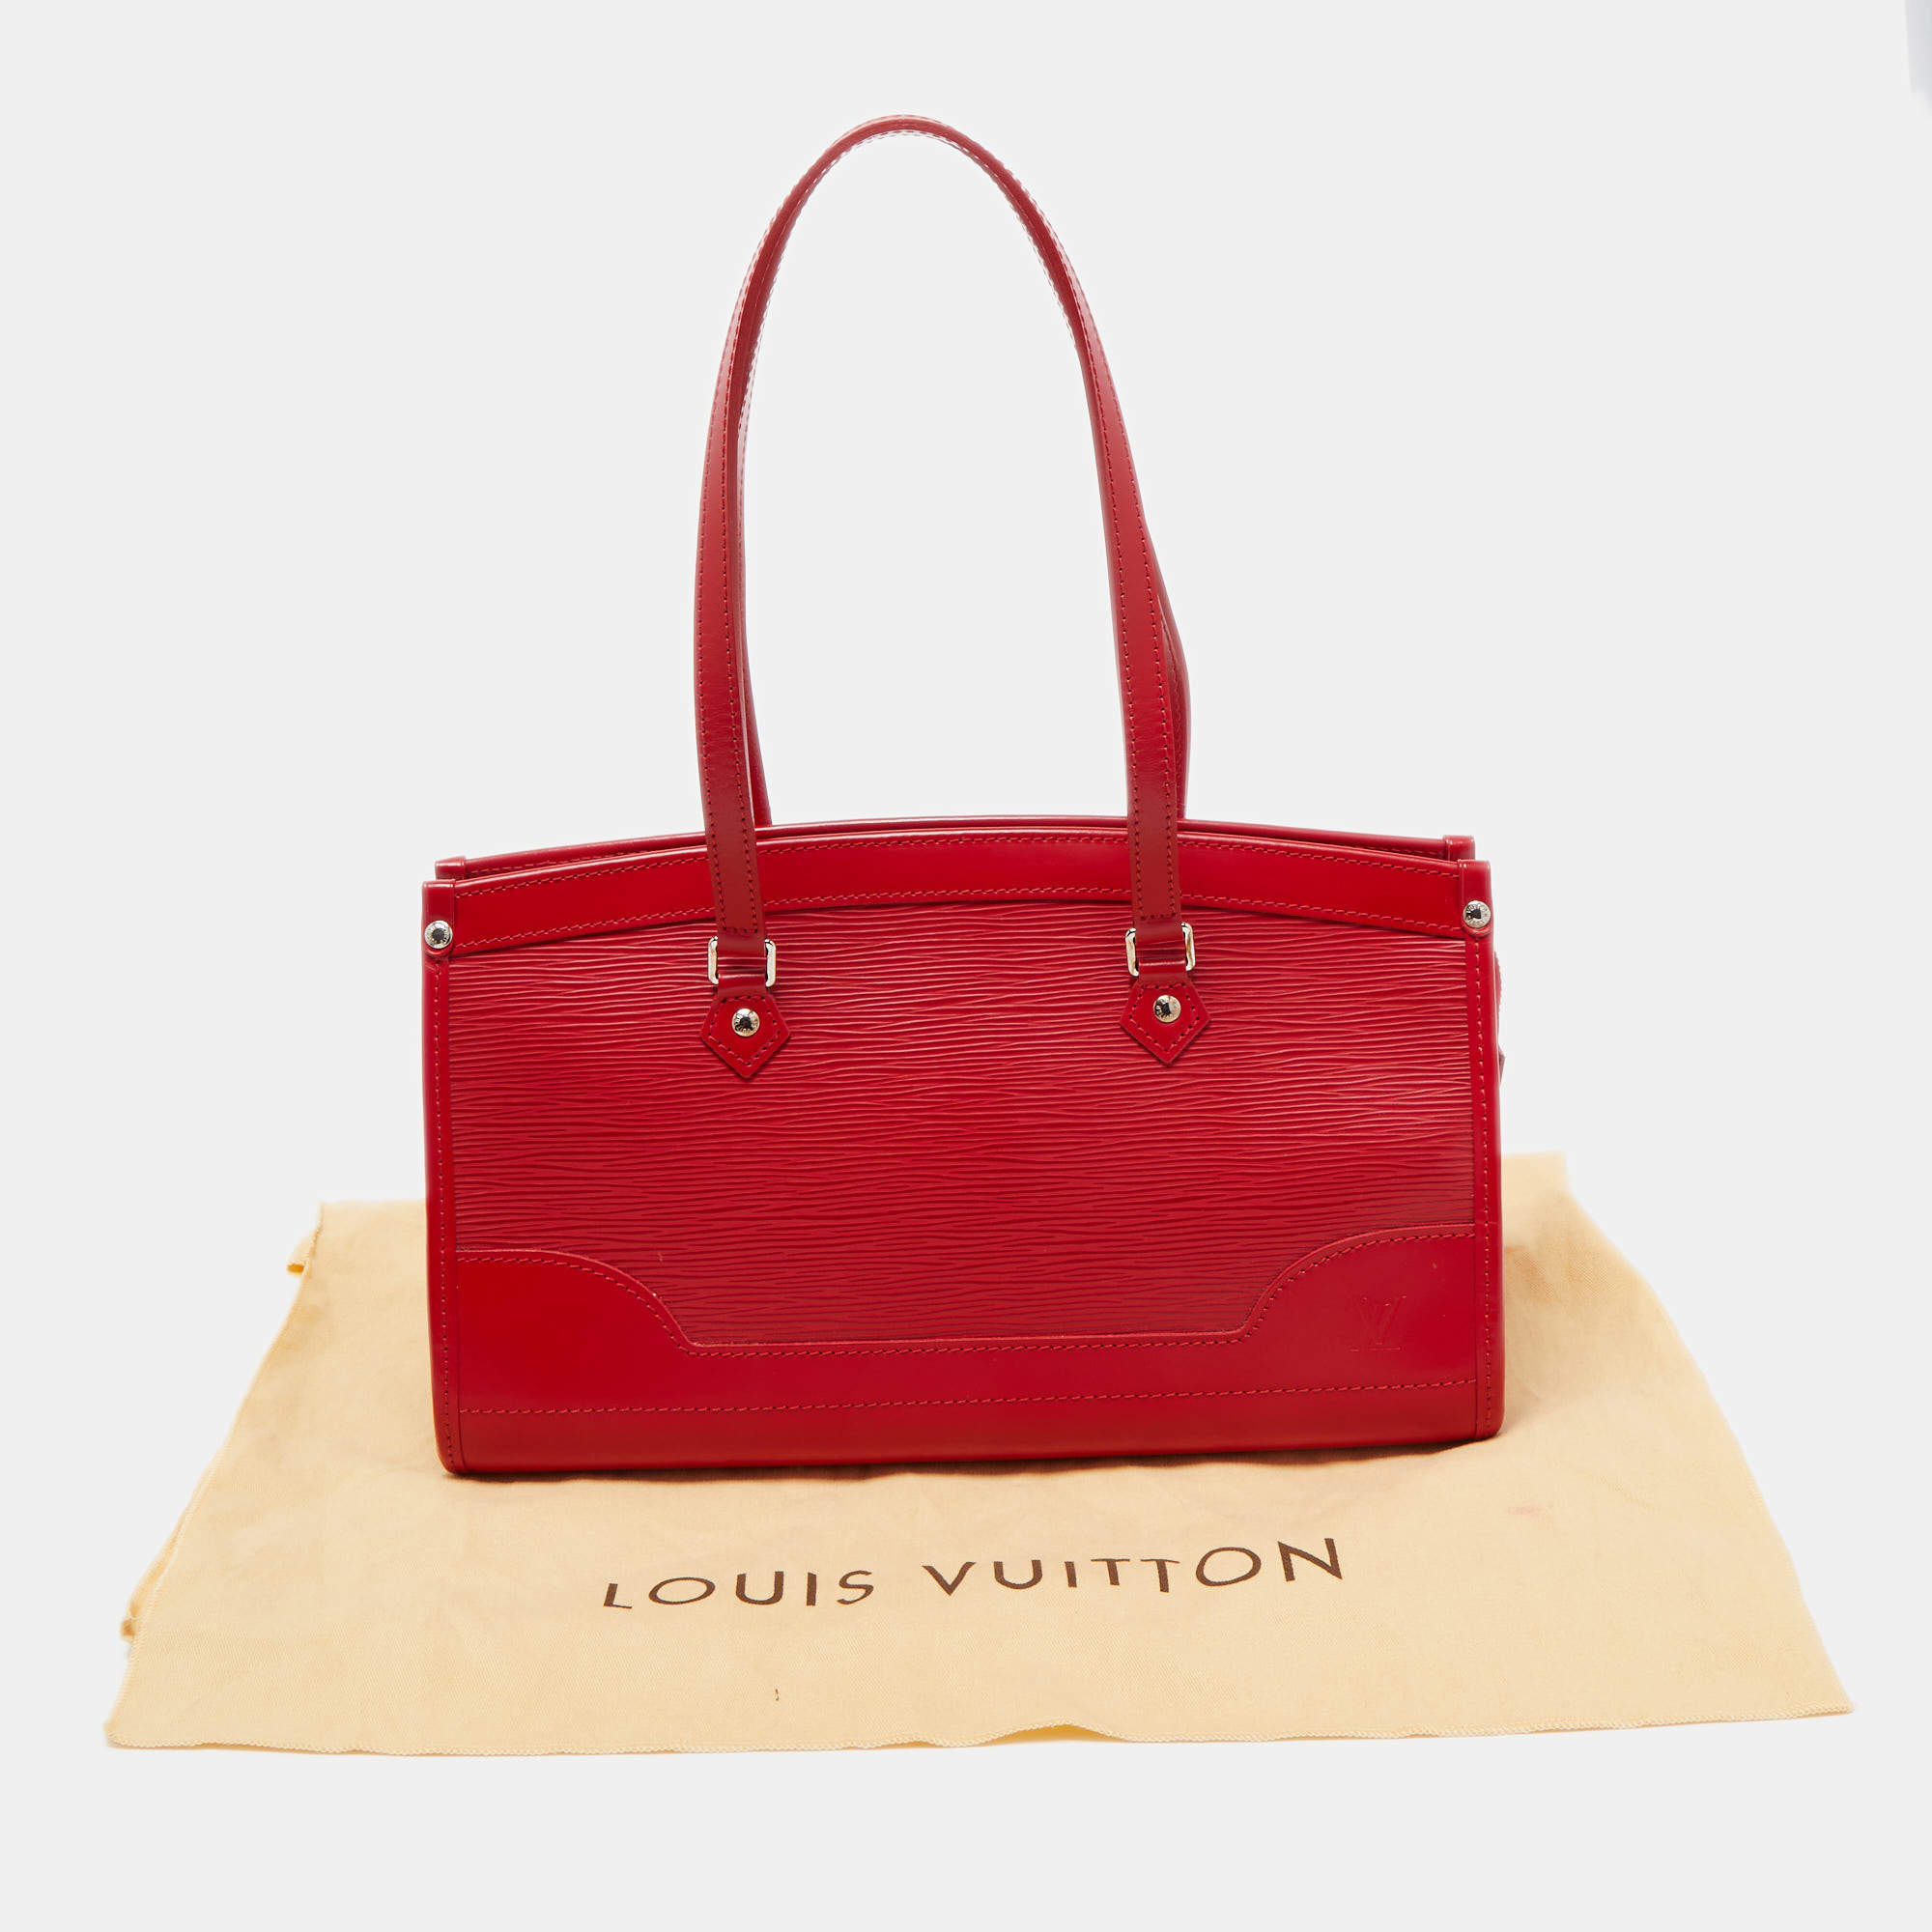 LOUIS VUITTON Authentic Women's Epi Hand Bag Riviera Red Leather Zipper